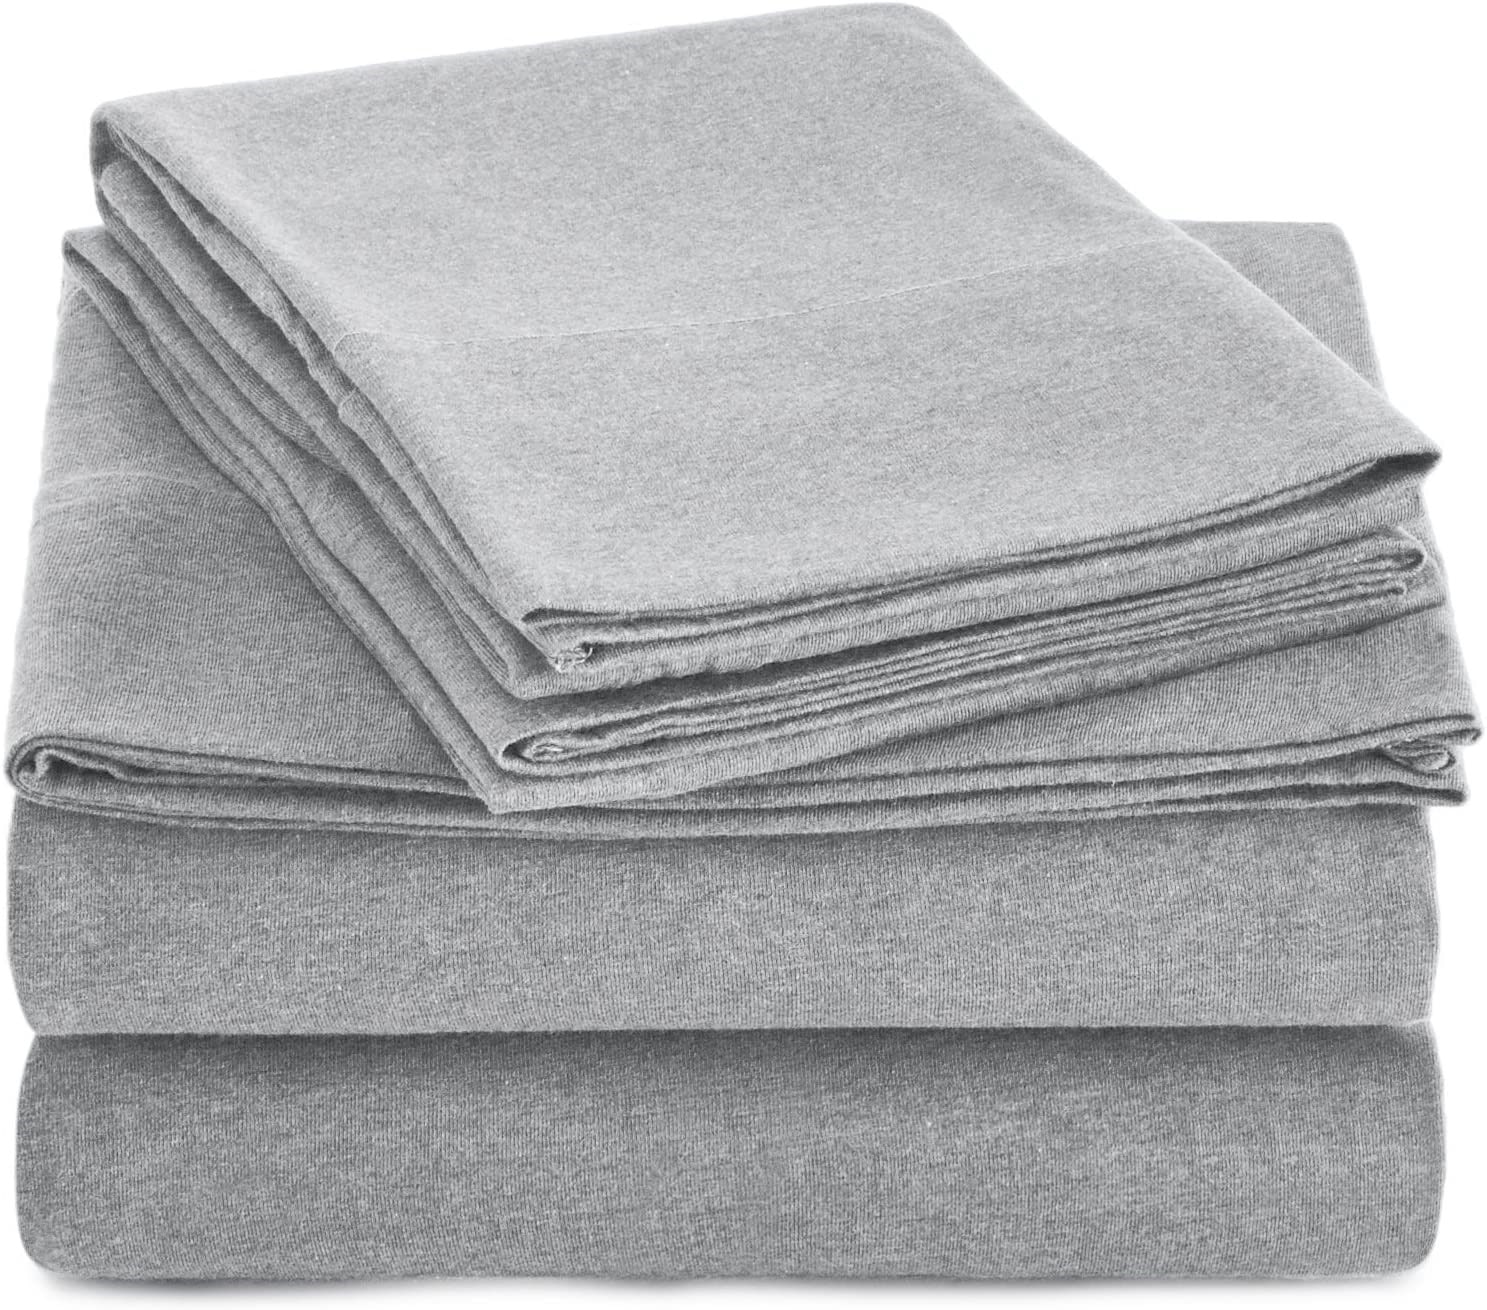 AmazonBasics Heather Cotton Jersey Bed Sheet Set